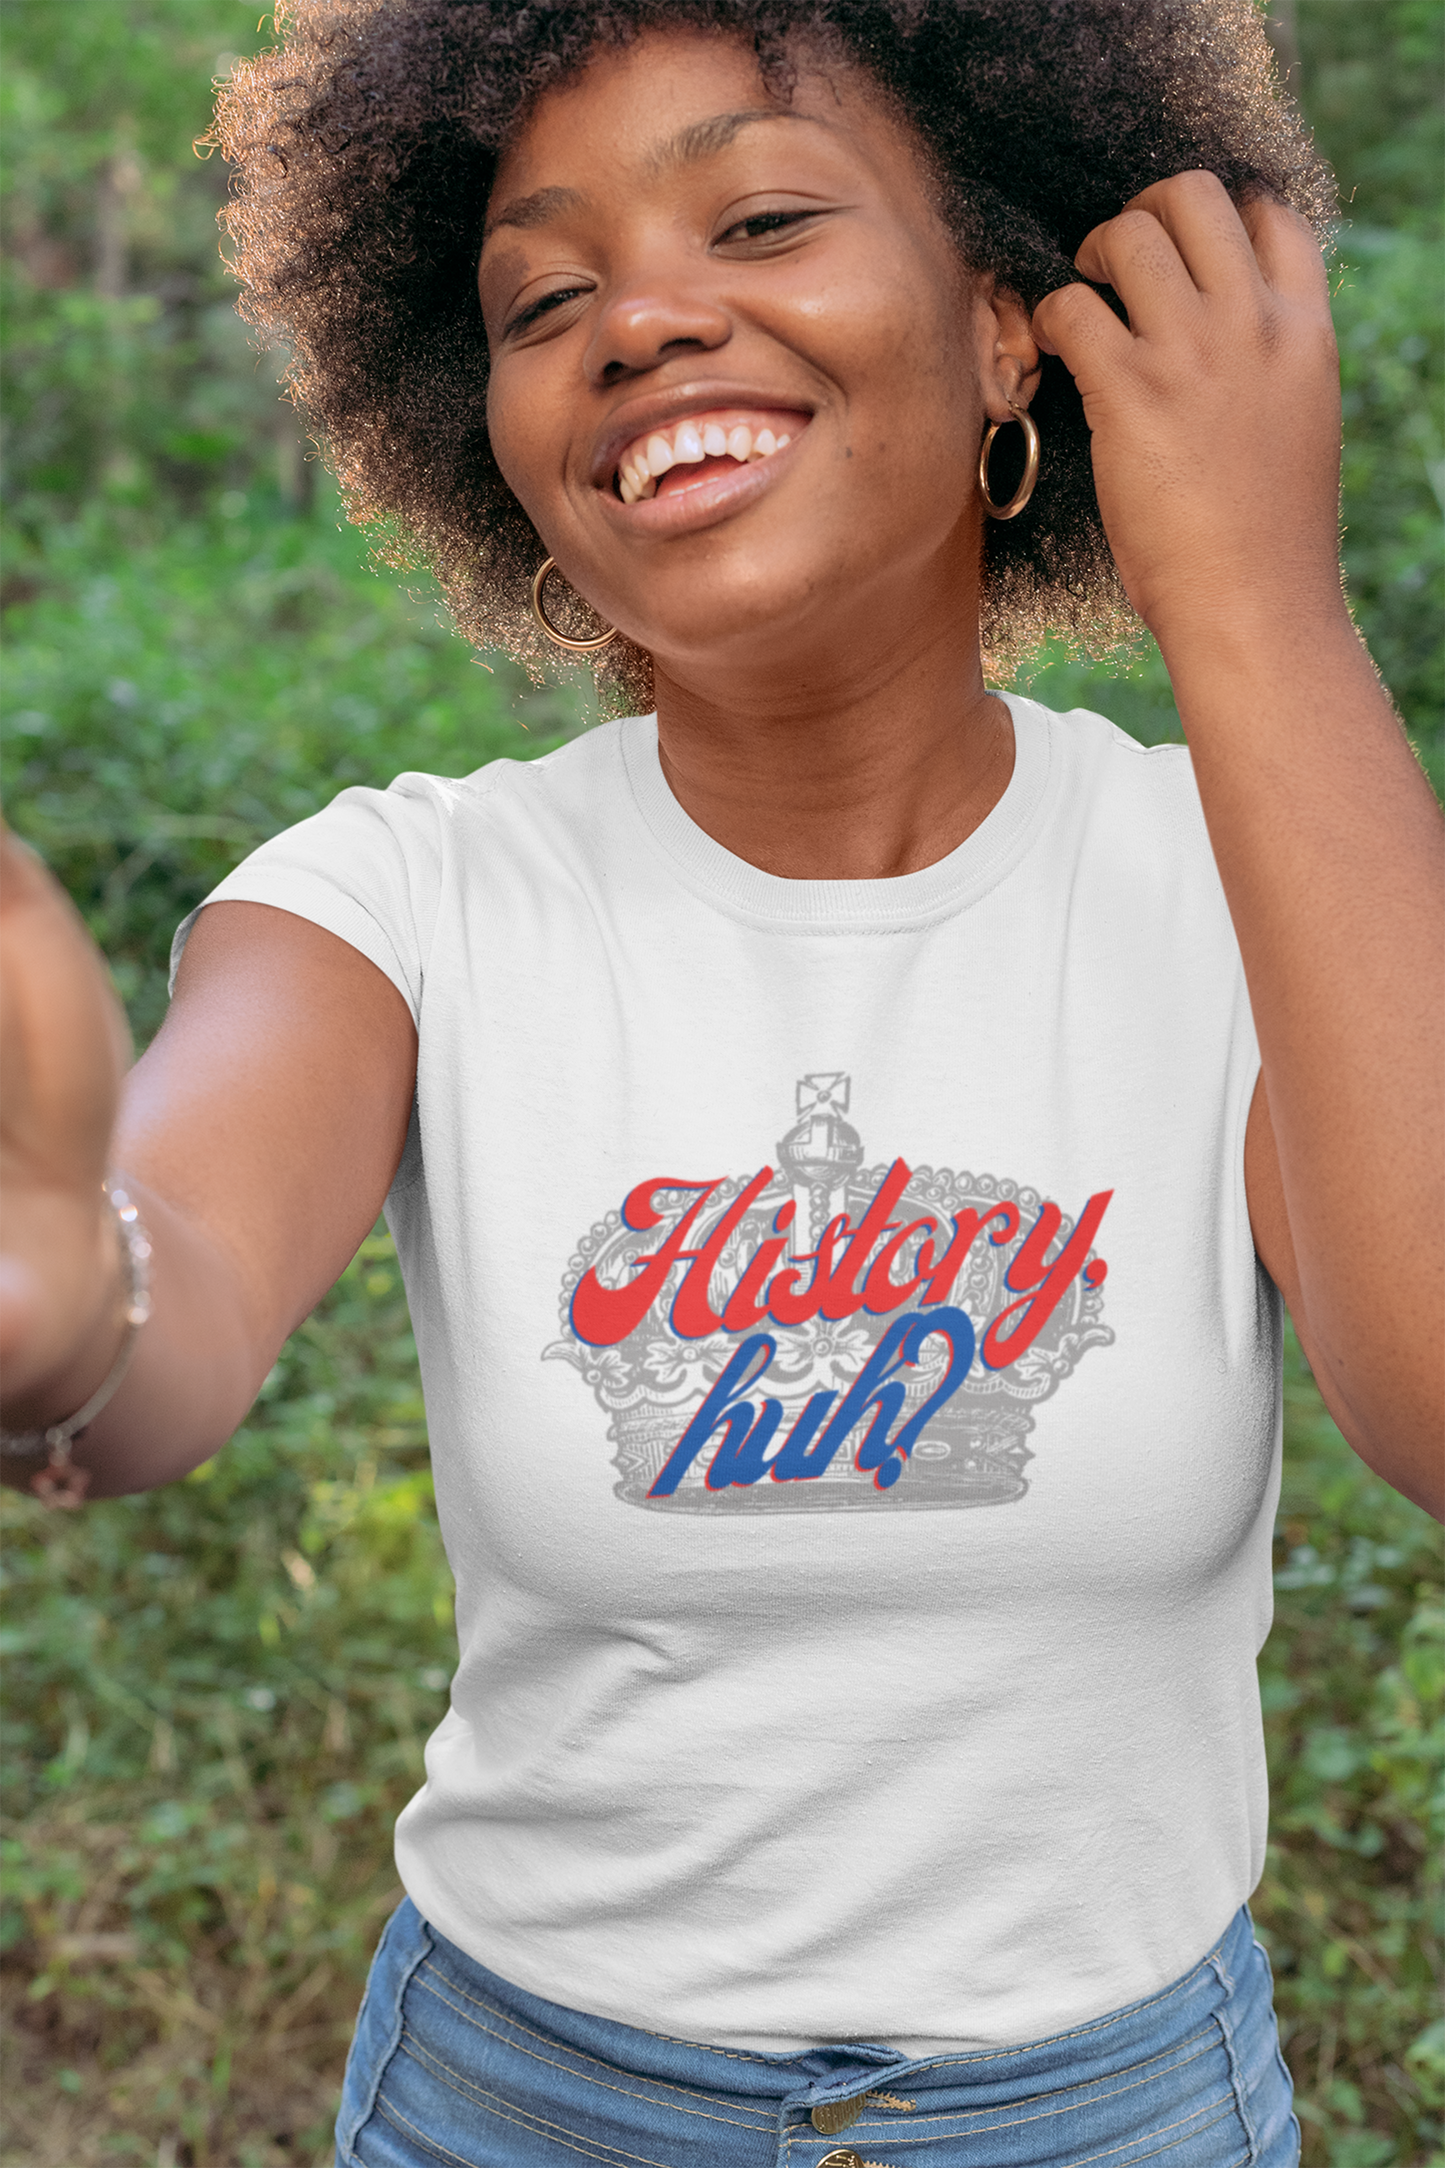 History, huh? Women's T-Shirt - Henry's Version